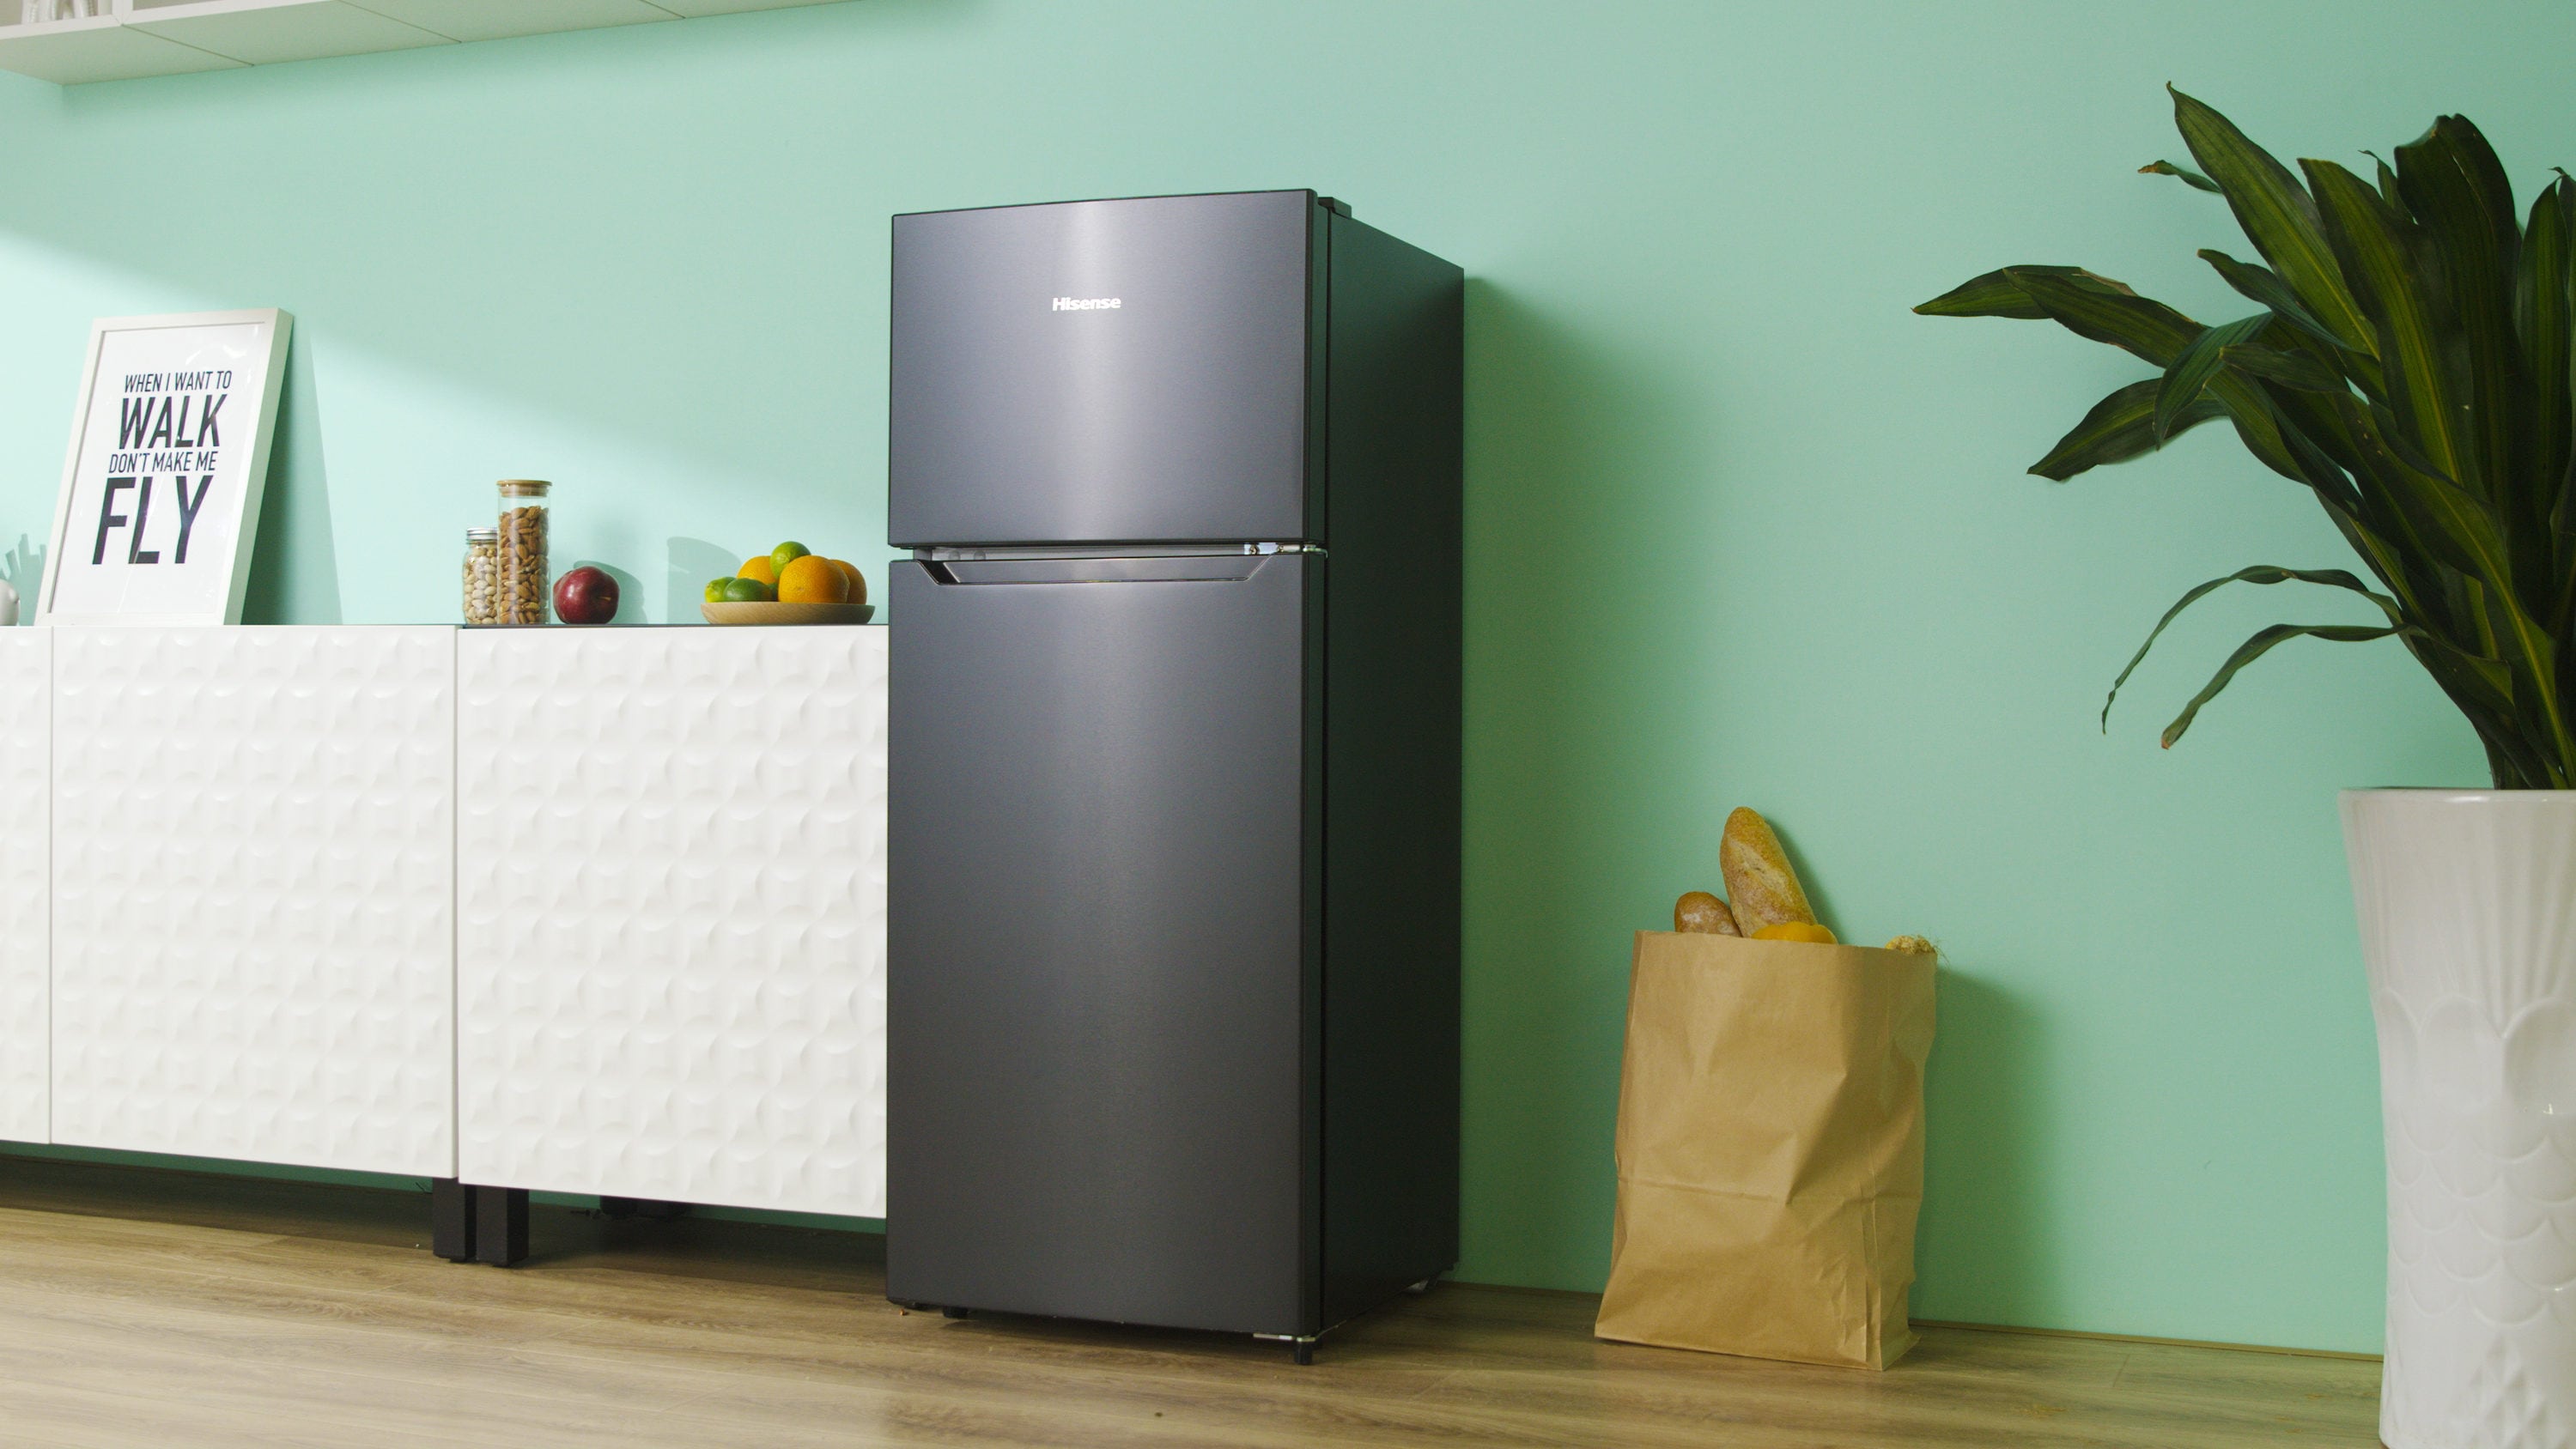 4.4 Cu. Ft. Freestanding Compact Refrigerator (RR44D6ASE